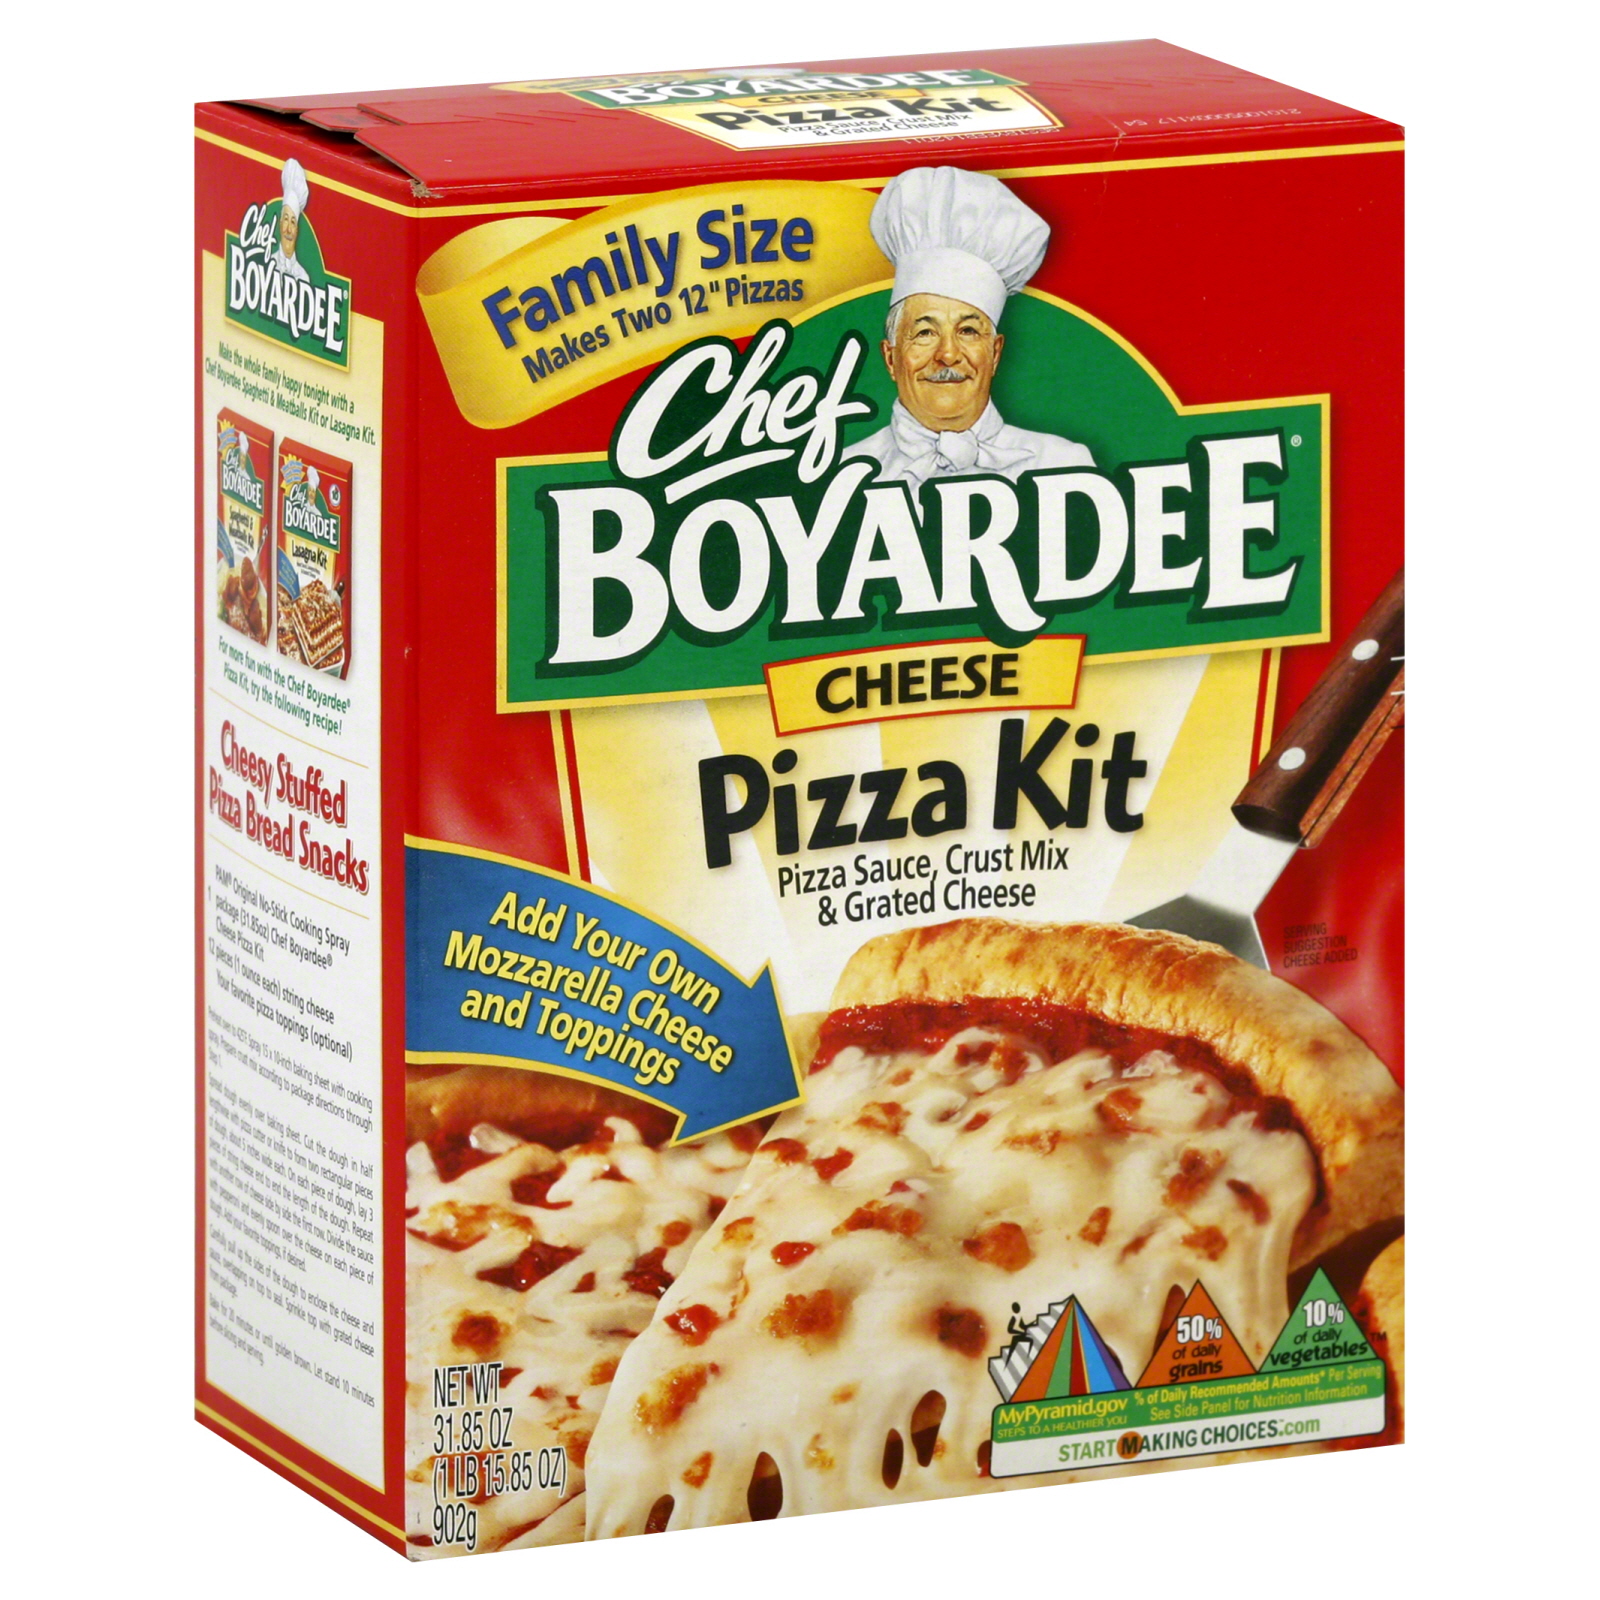 Chef Boyardee Pizza Kit, Cheese, Family Size, 31.85 oz (1 lb 15.85 oz) 902 g